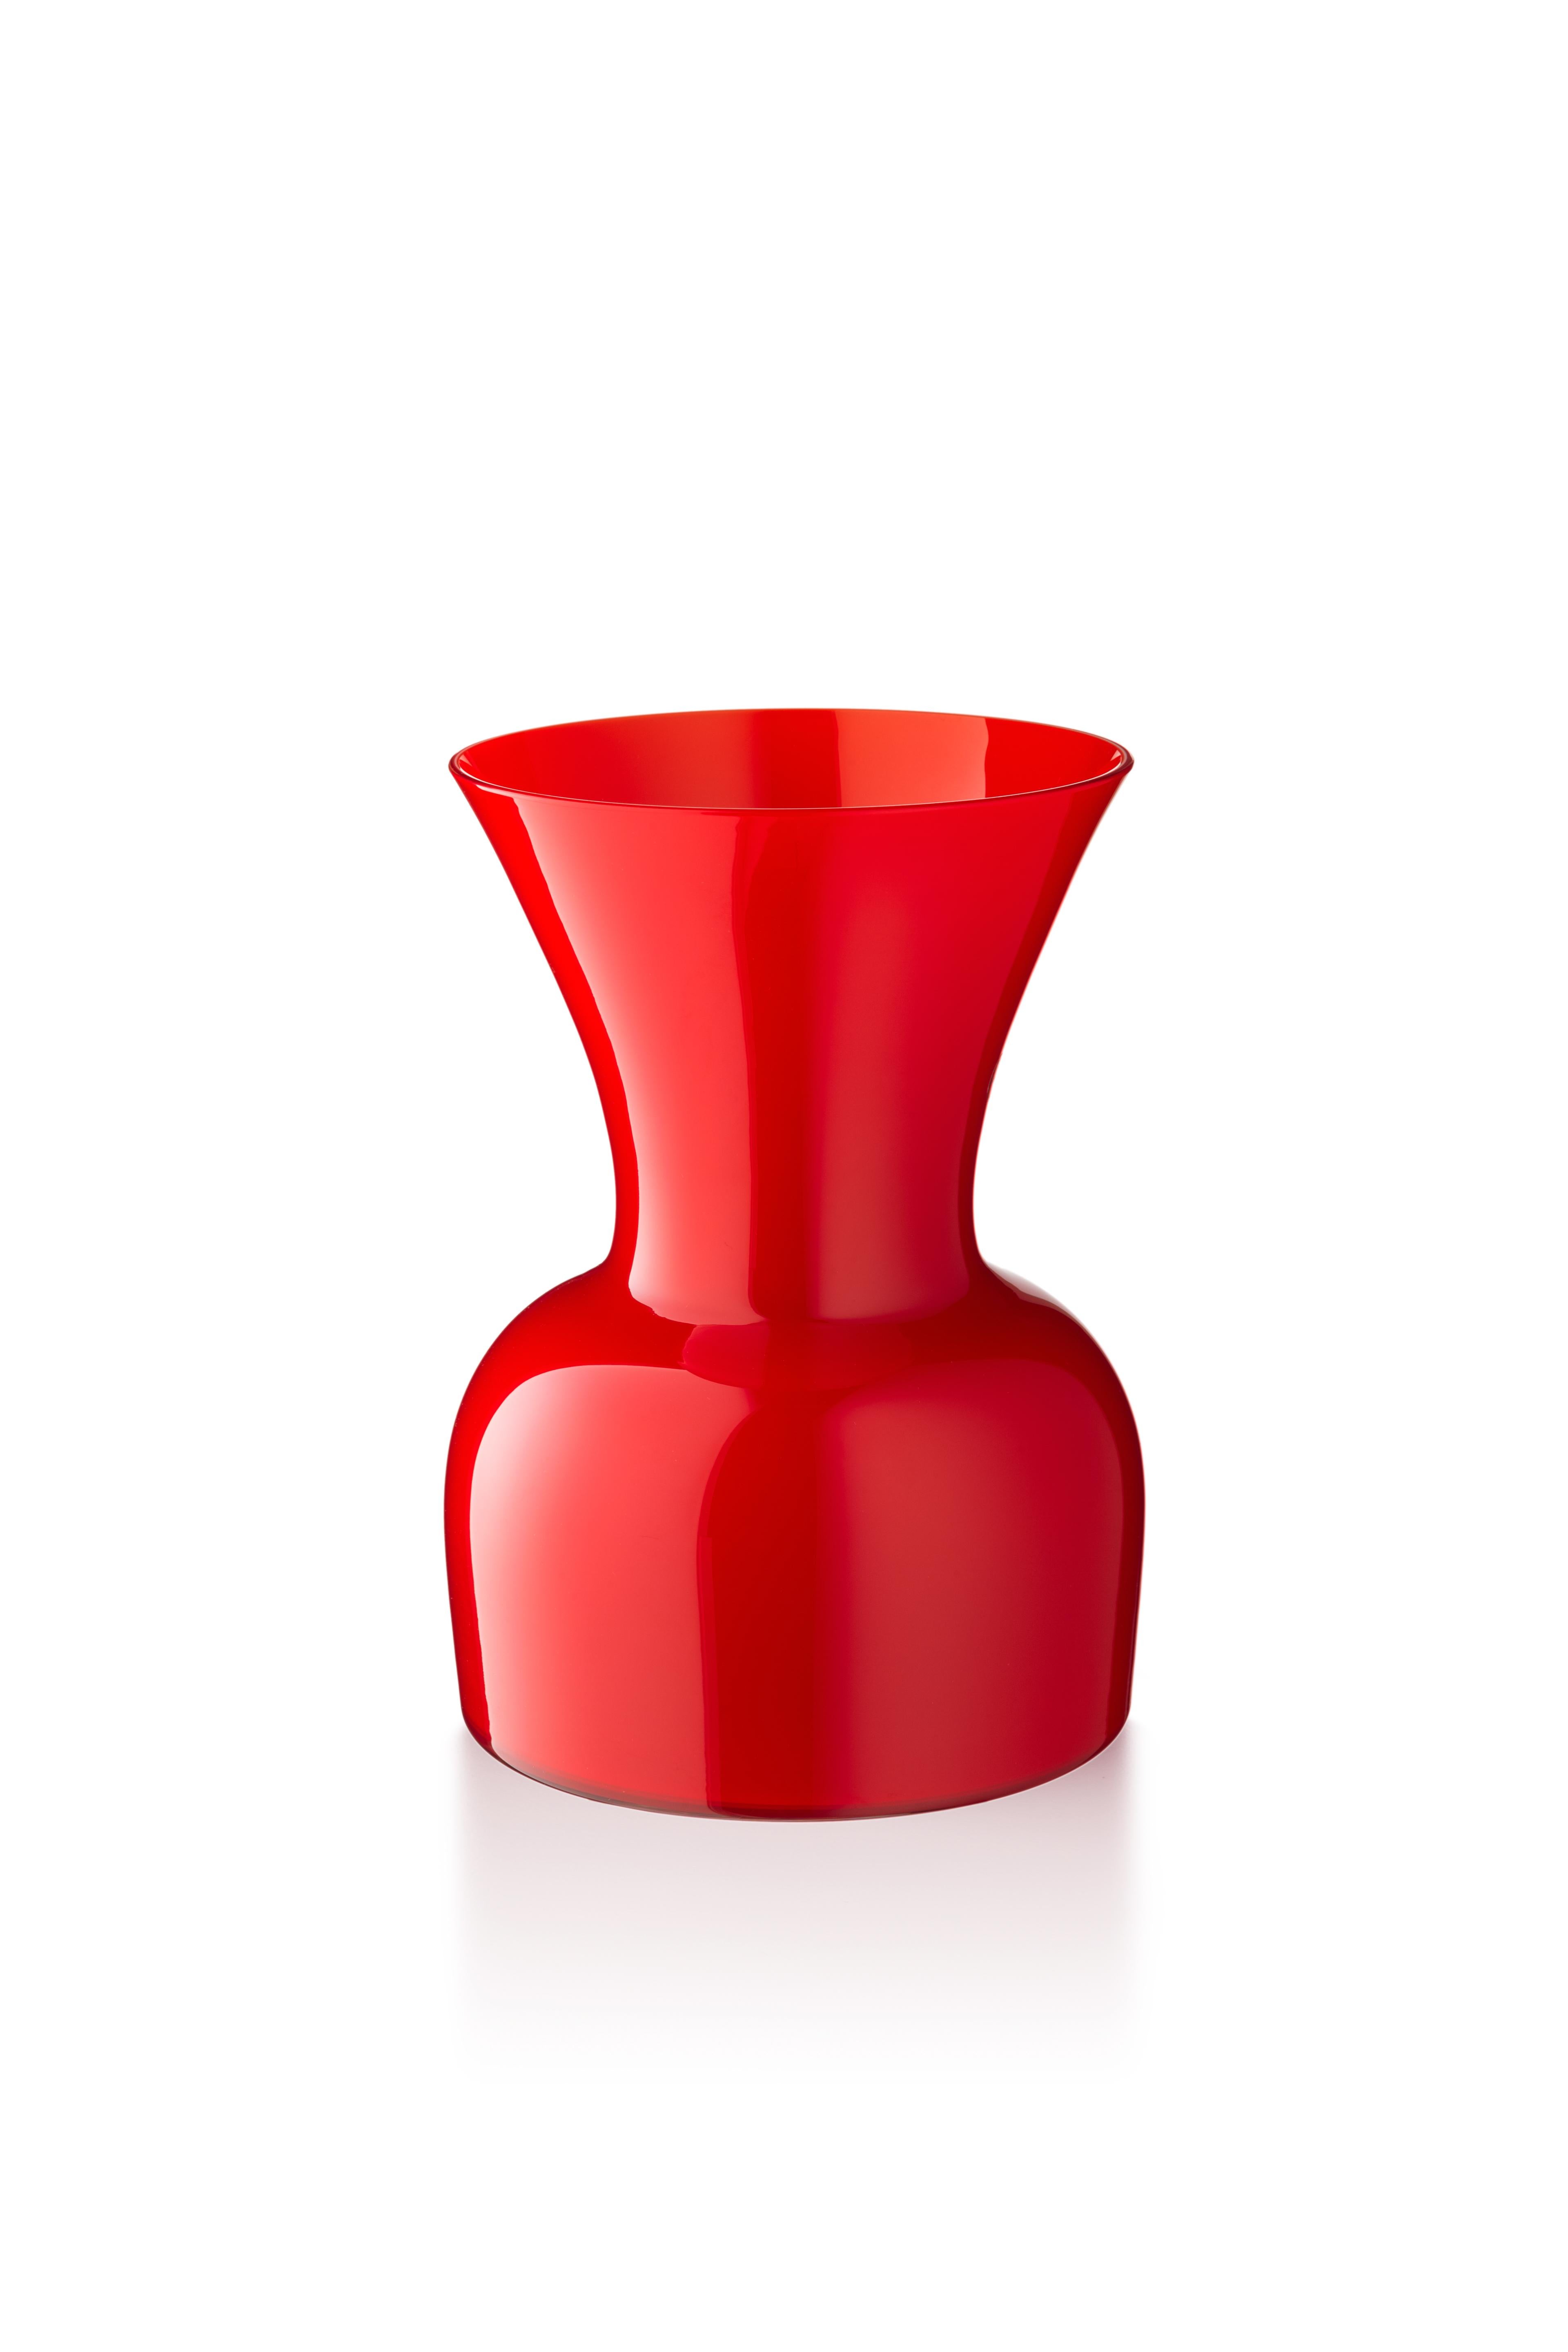 Orange (10040) Medium Profili Daisy Murano Glass Vase by Anna Gili